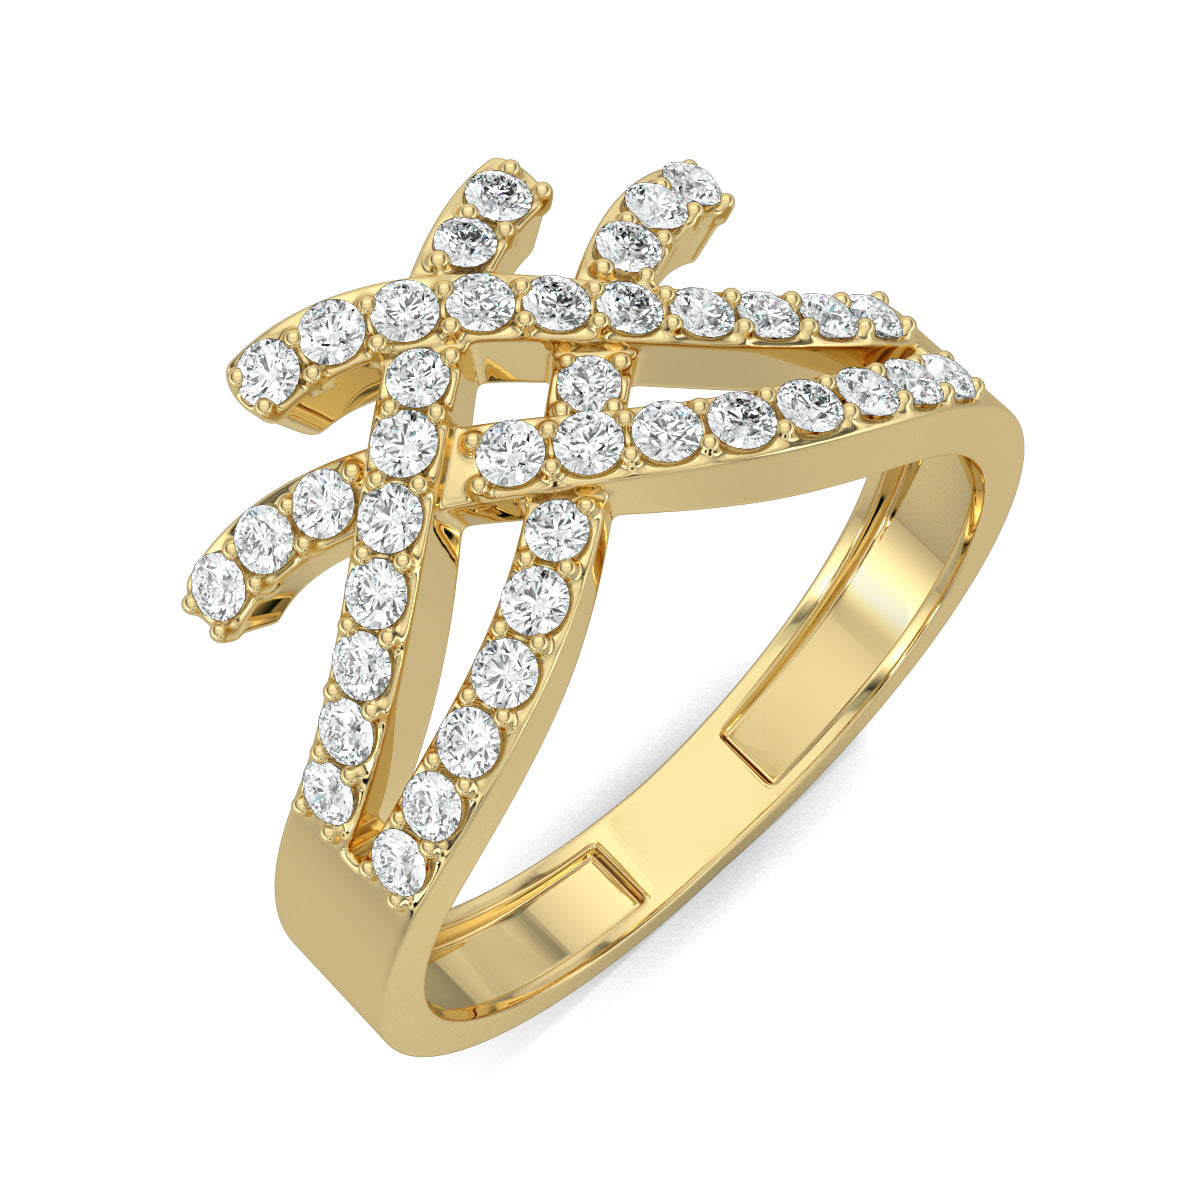 Yellow Gold, Diamond Ring, Diamond ring, Bella Crown Diamond Ring, Italian design ring, Everyday diamond ring, Natural diamond ring, Lab-grown diamond ring, Split shank diamond ring, Crown-inspired ring, Diamond-studded ring